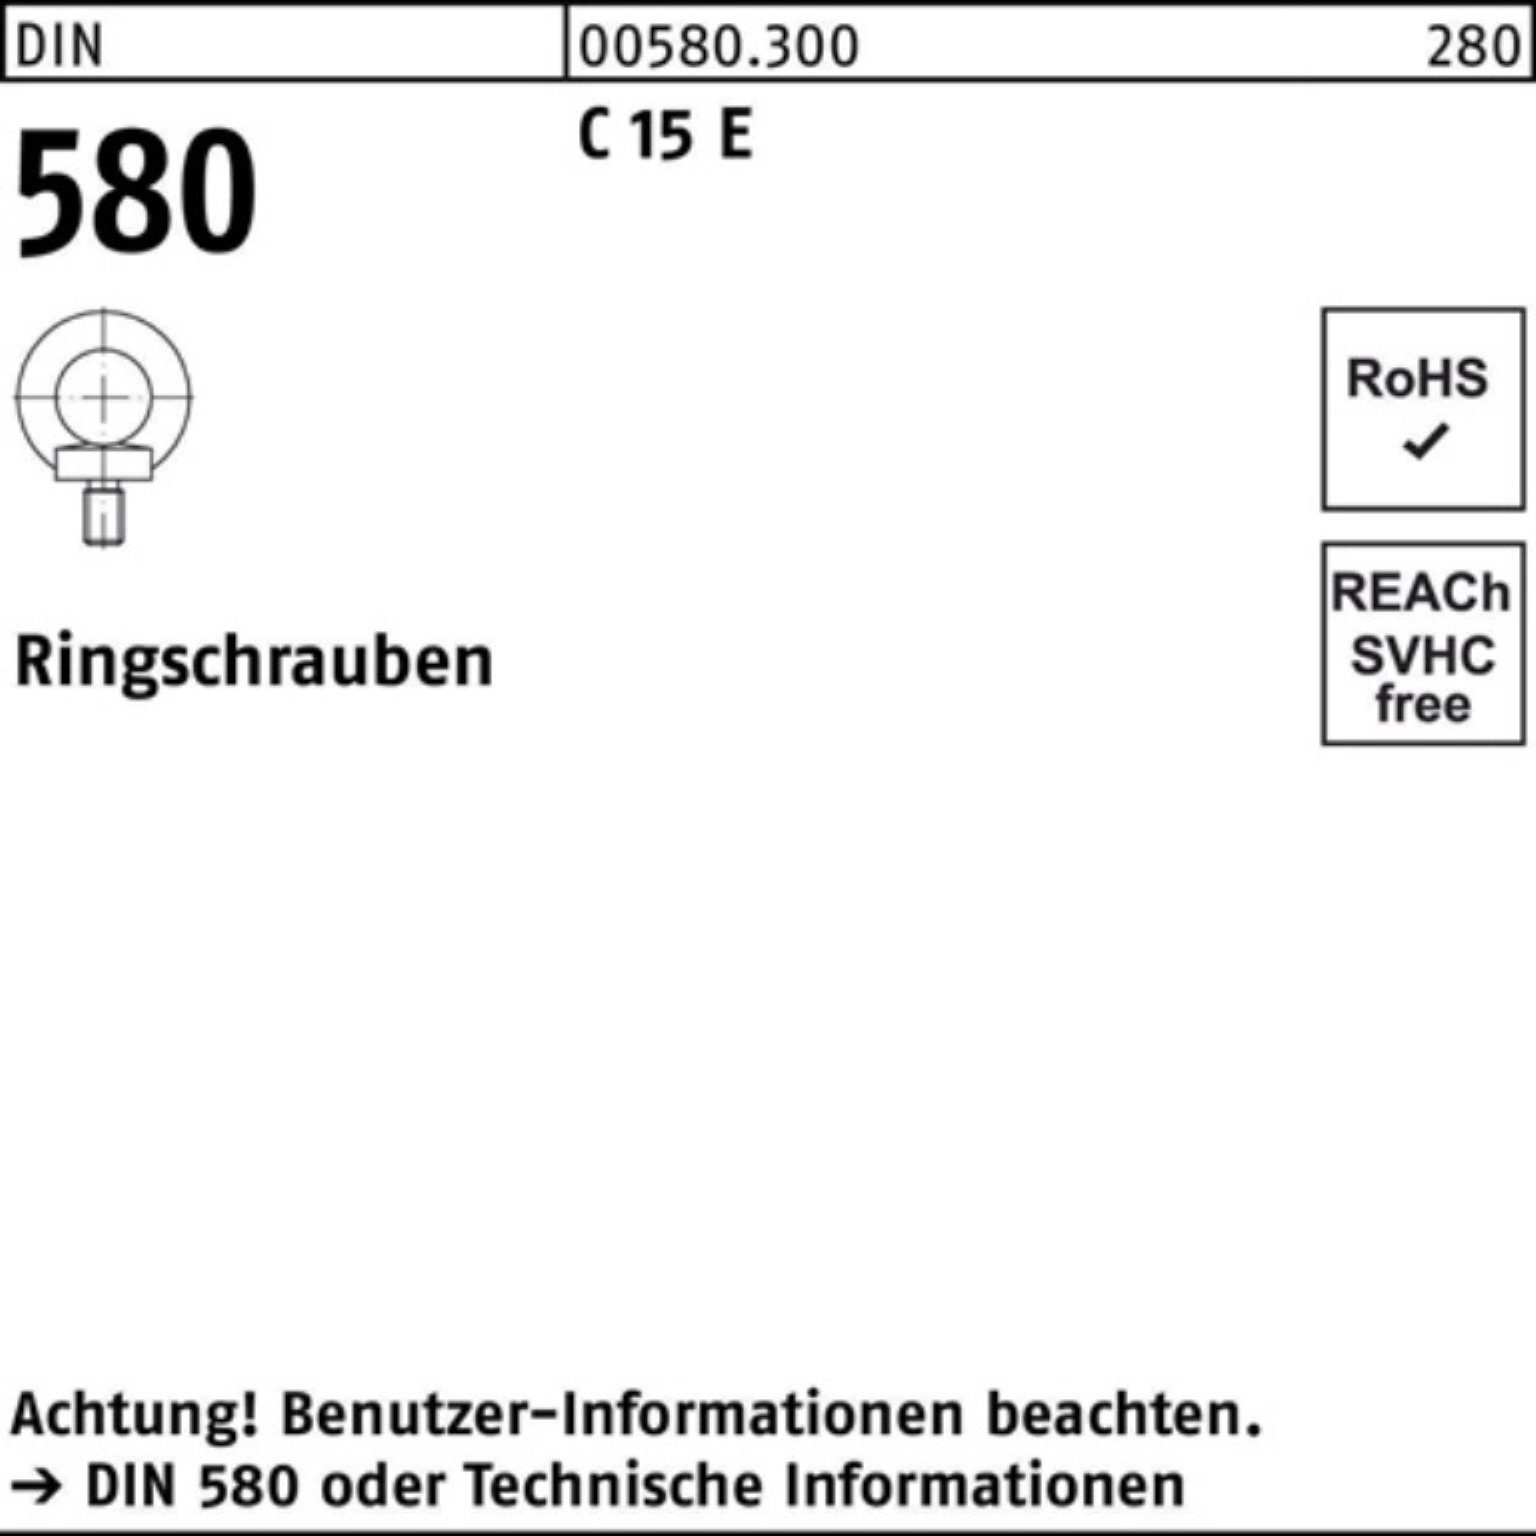 Reyher Schraube 100er Pack Ringschraube DIN 580 M18 C 15 E 1 Stück DIN 580 C 15 E Rin